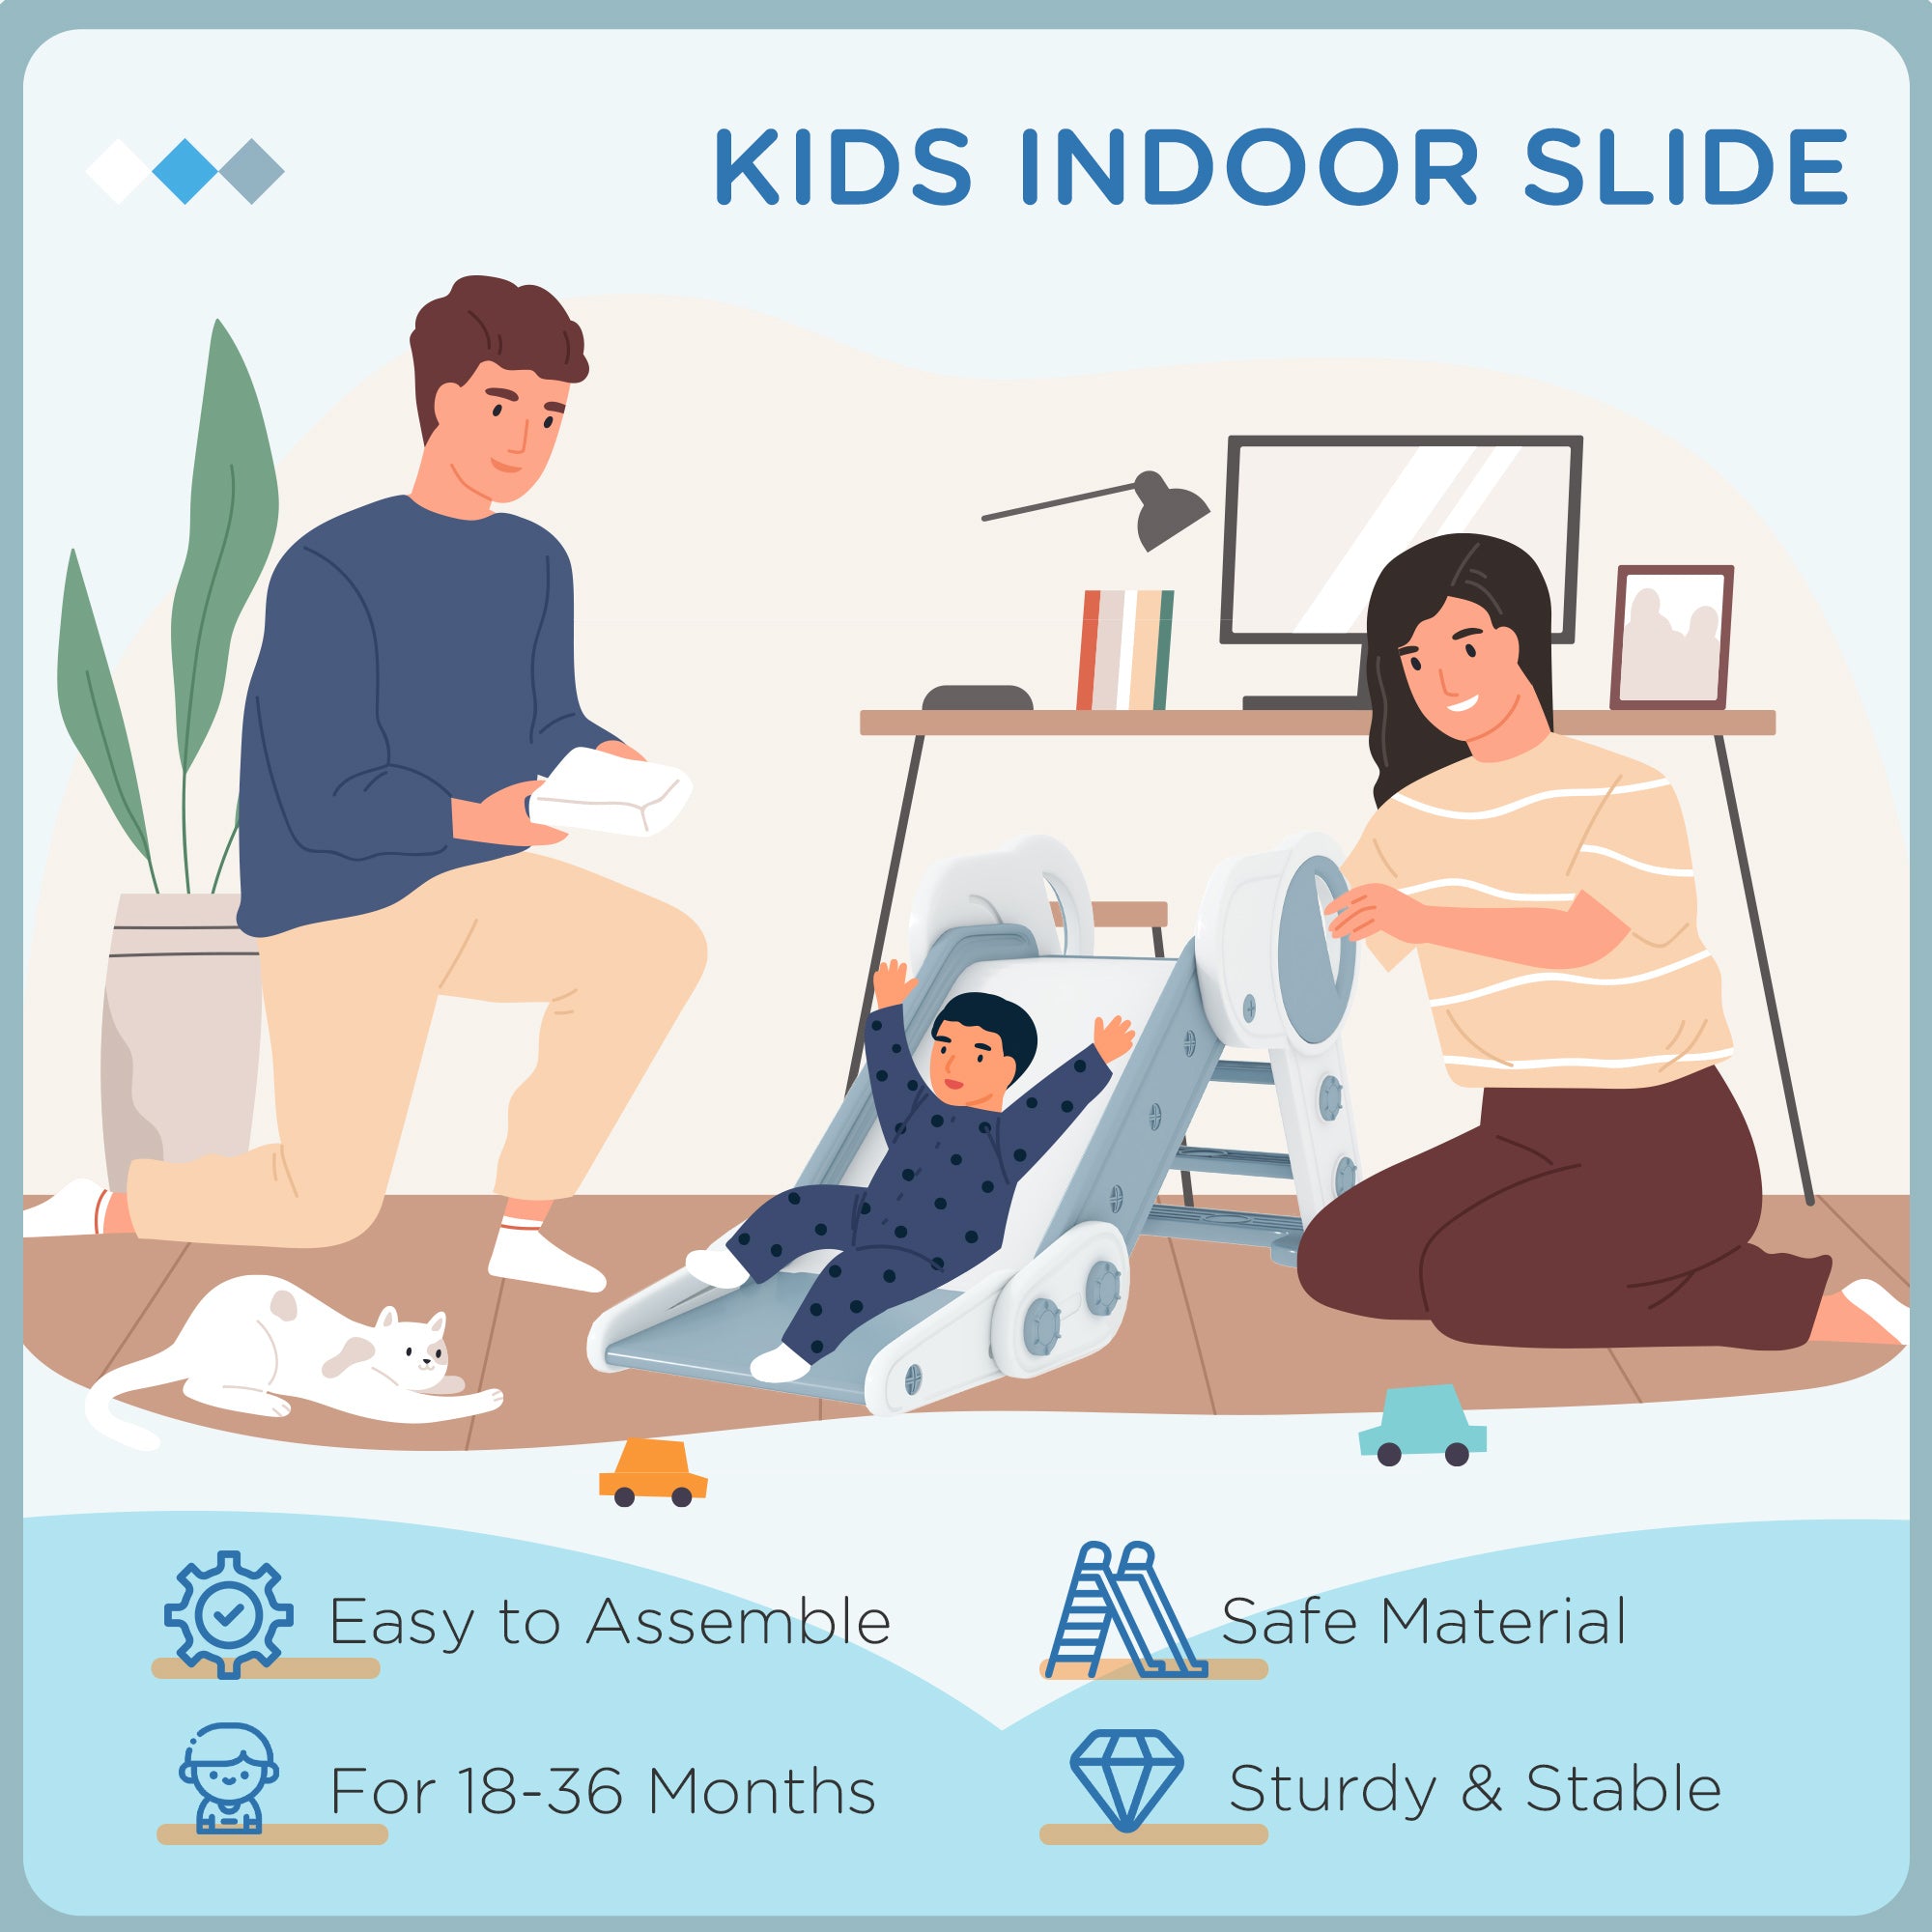 AIYAPLAY Foldable Kids Slide Indoor, Freestanding Baby Slide for 1.5-3 Years Old, Grey